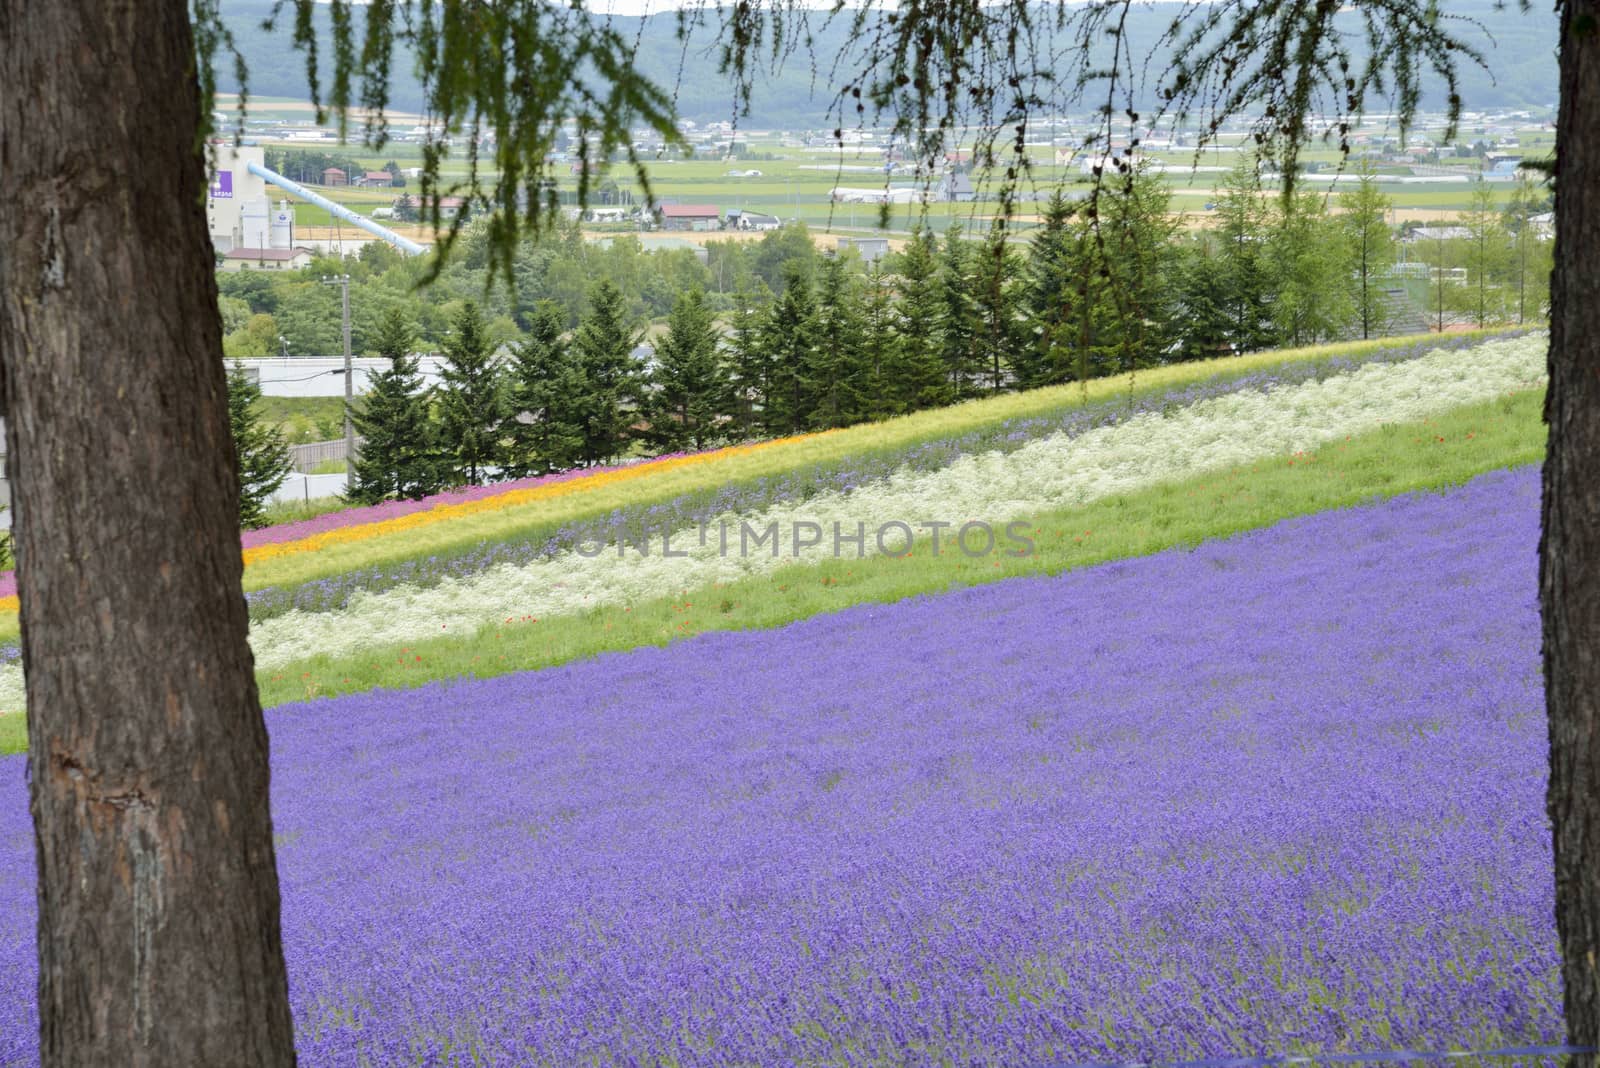 Colorful Lavender farm2